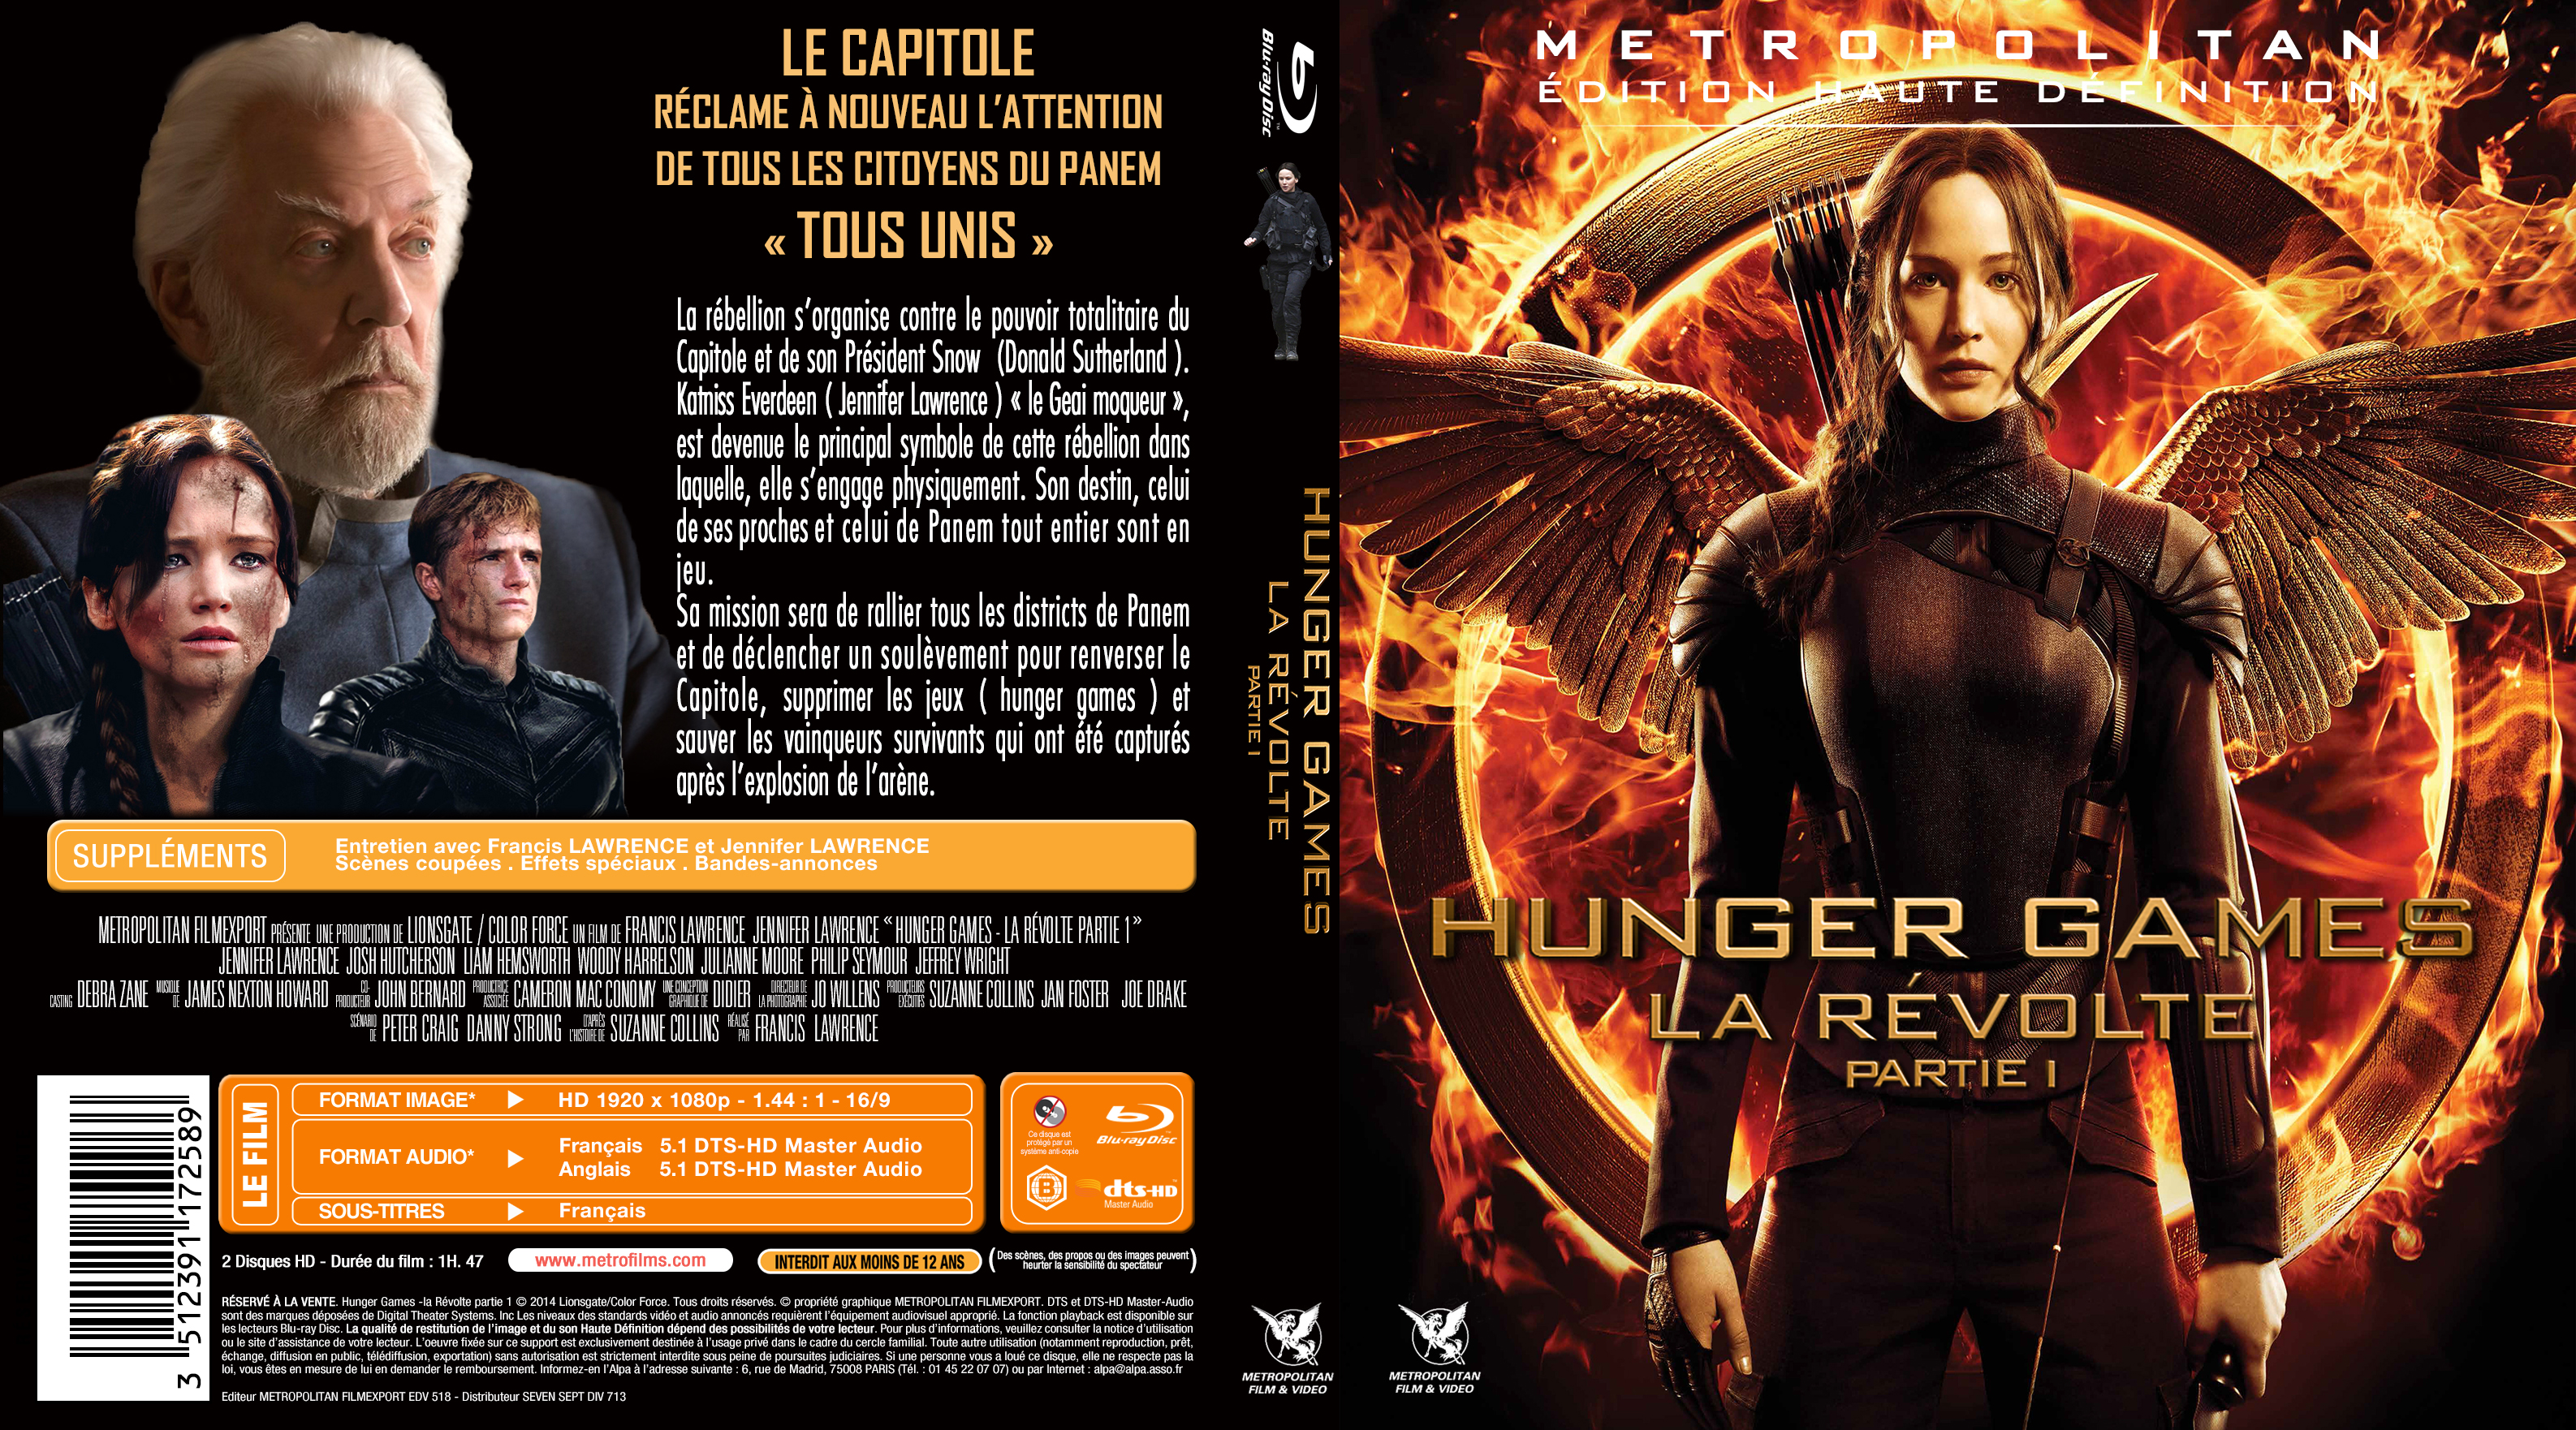 Jaquette DVD Hunger Games La Rvolte : Partie 1 custom (BLU-RAY)